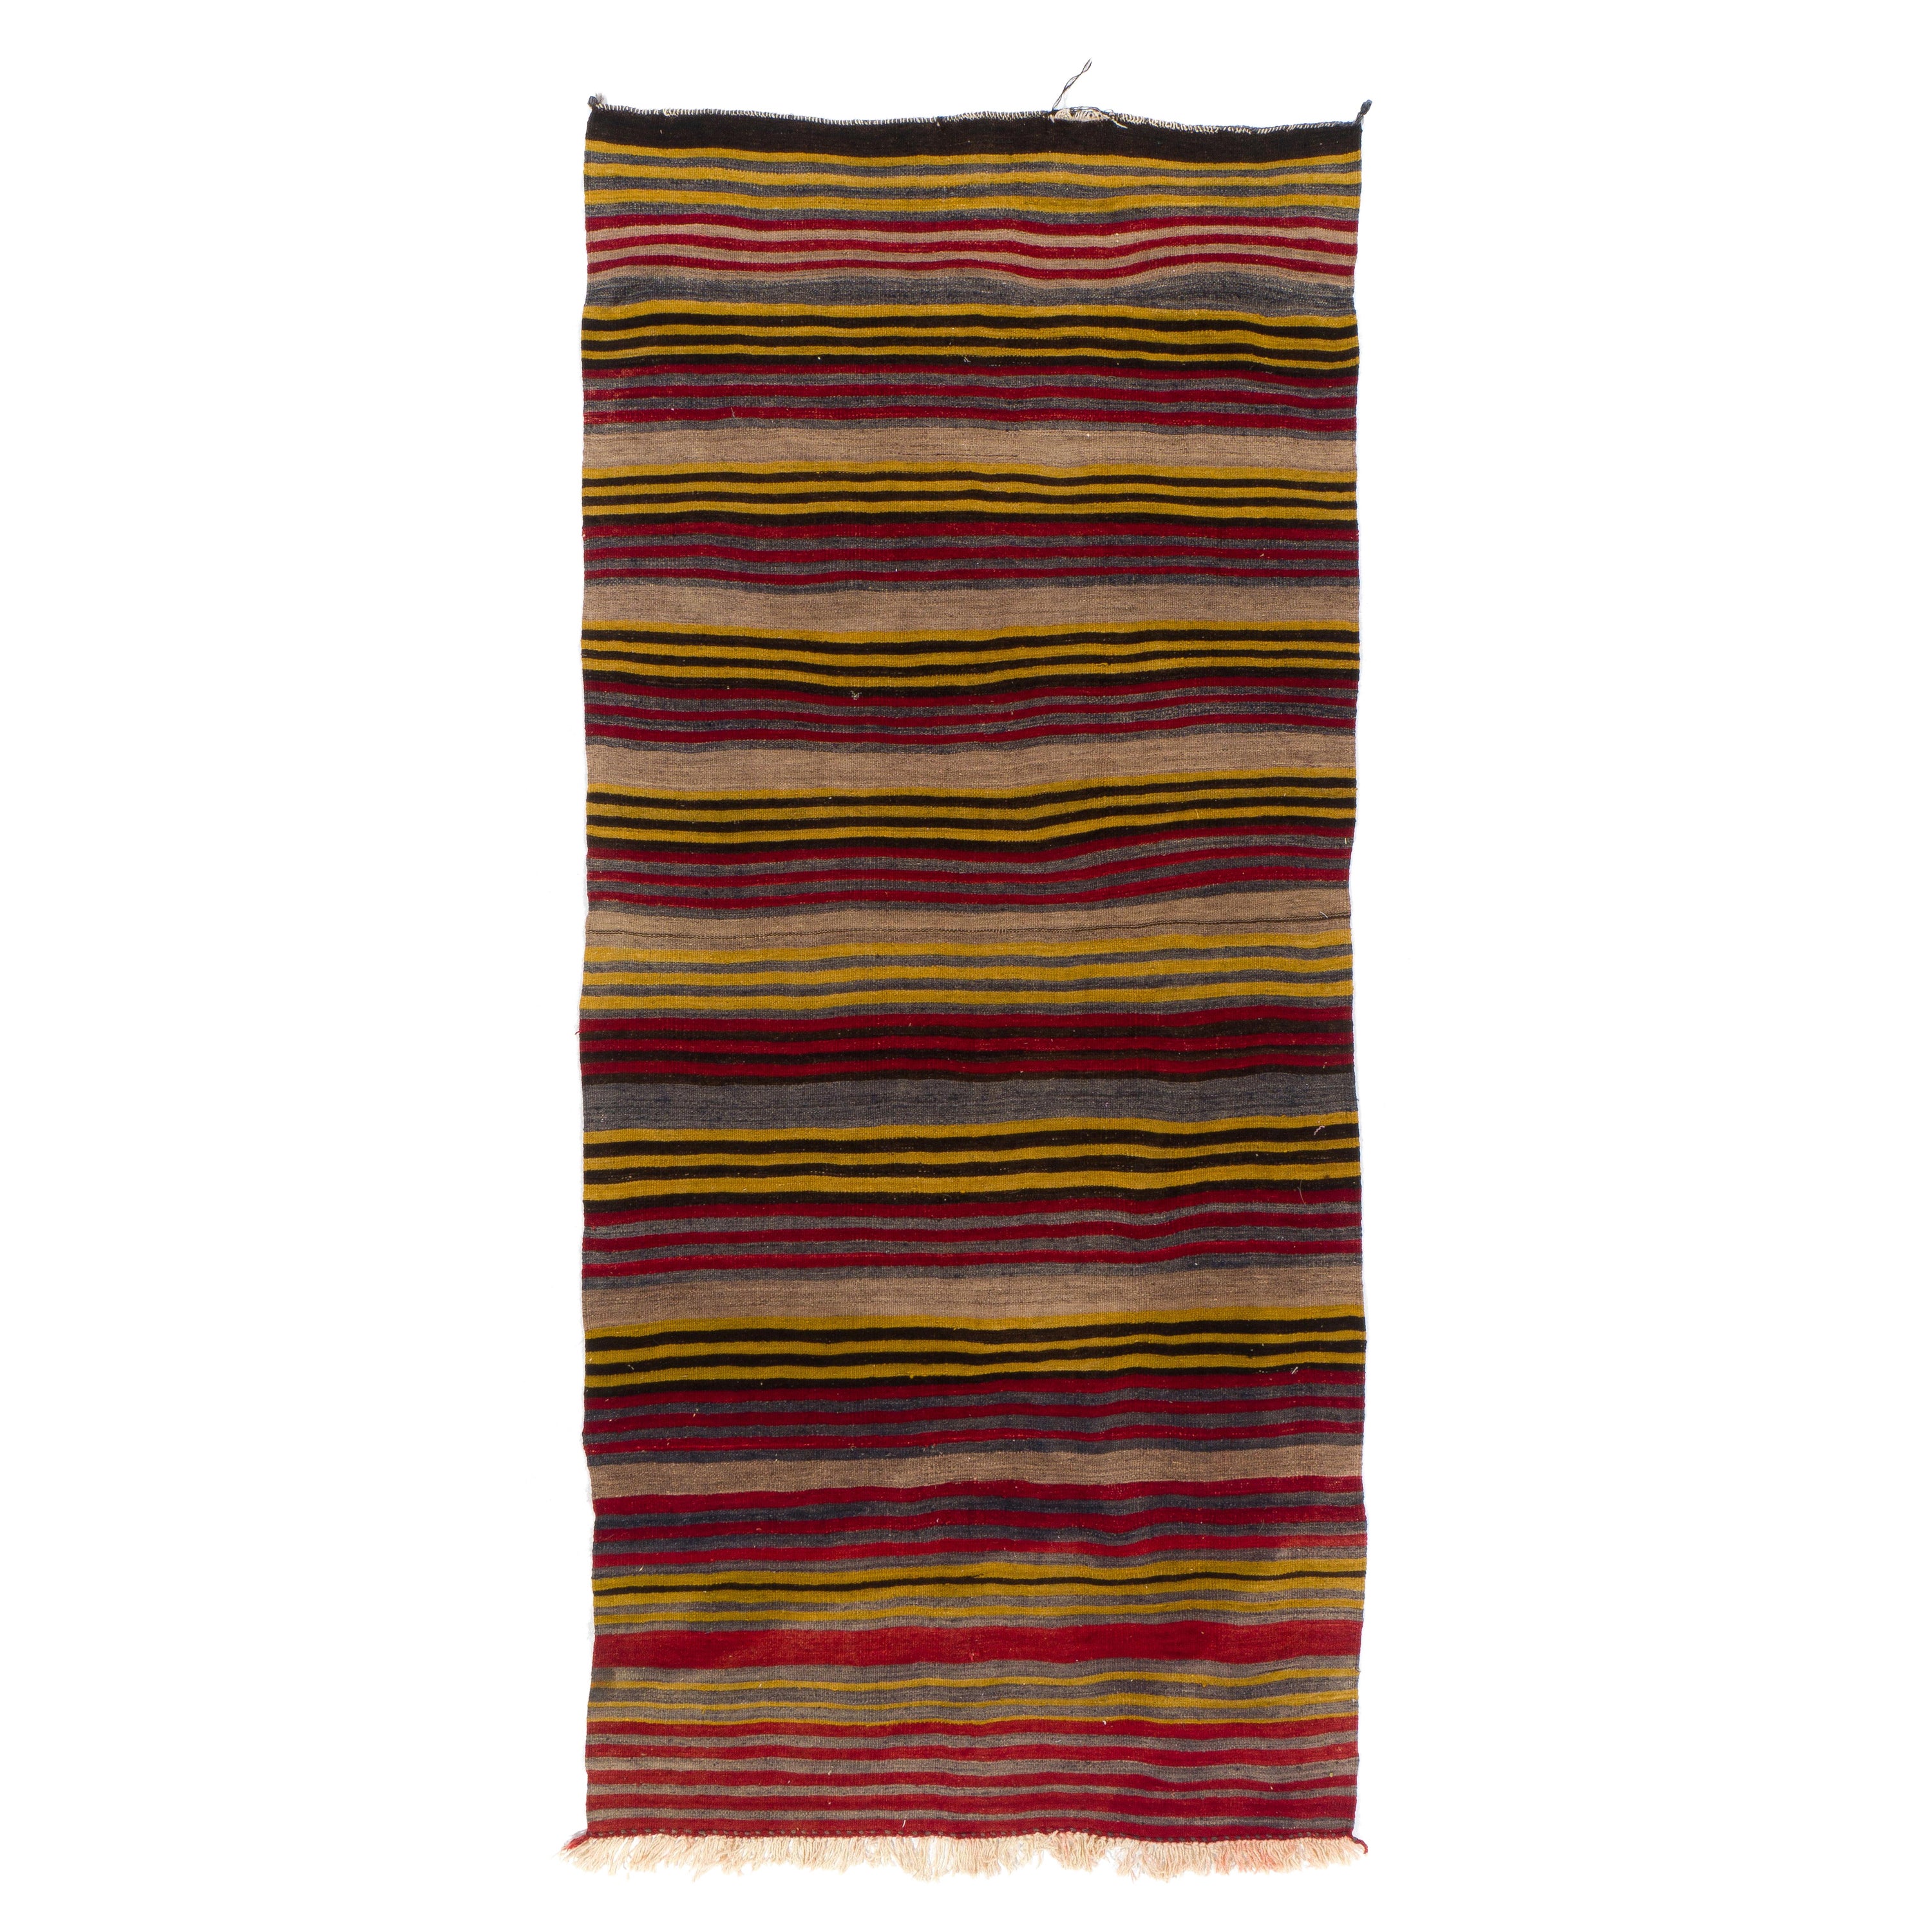 5.2x11.2 Ft Striped Handwoven Wool Kilim / Flat-weave, Reversible Runner Rug For Sale